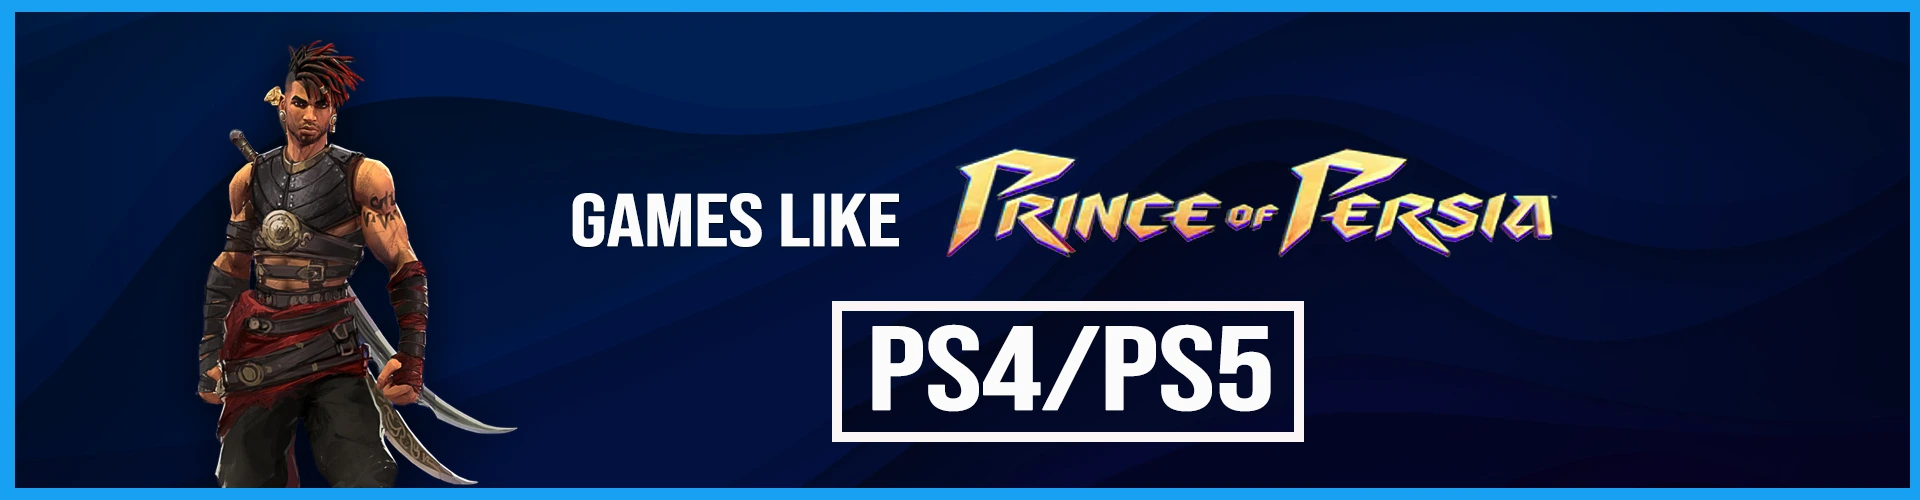 Die Top-Spiele Wie Prince of Persia für PS4/PS5